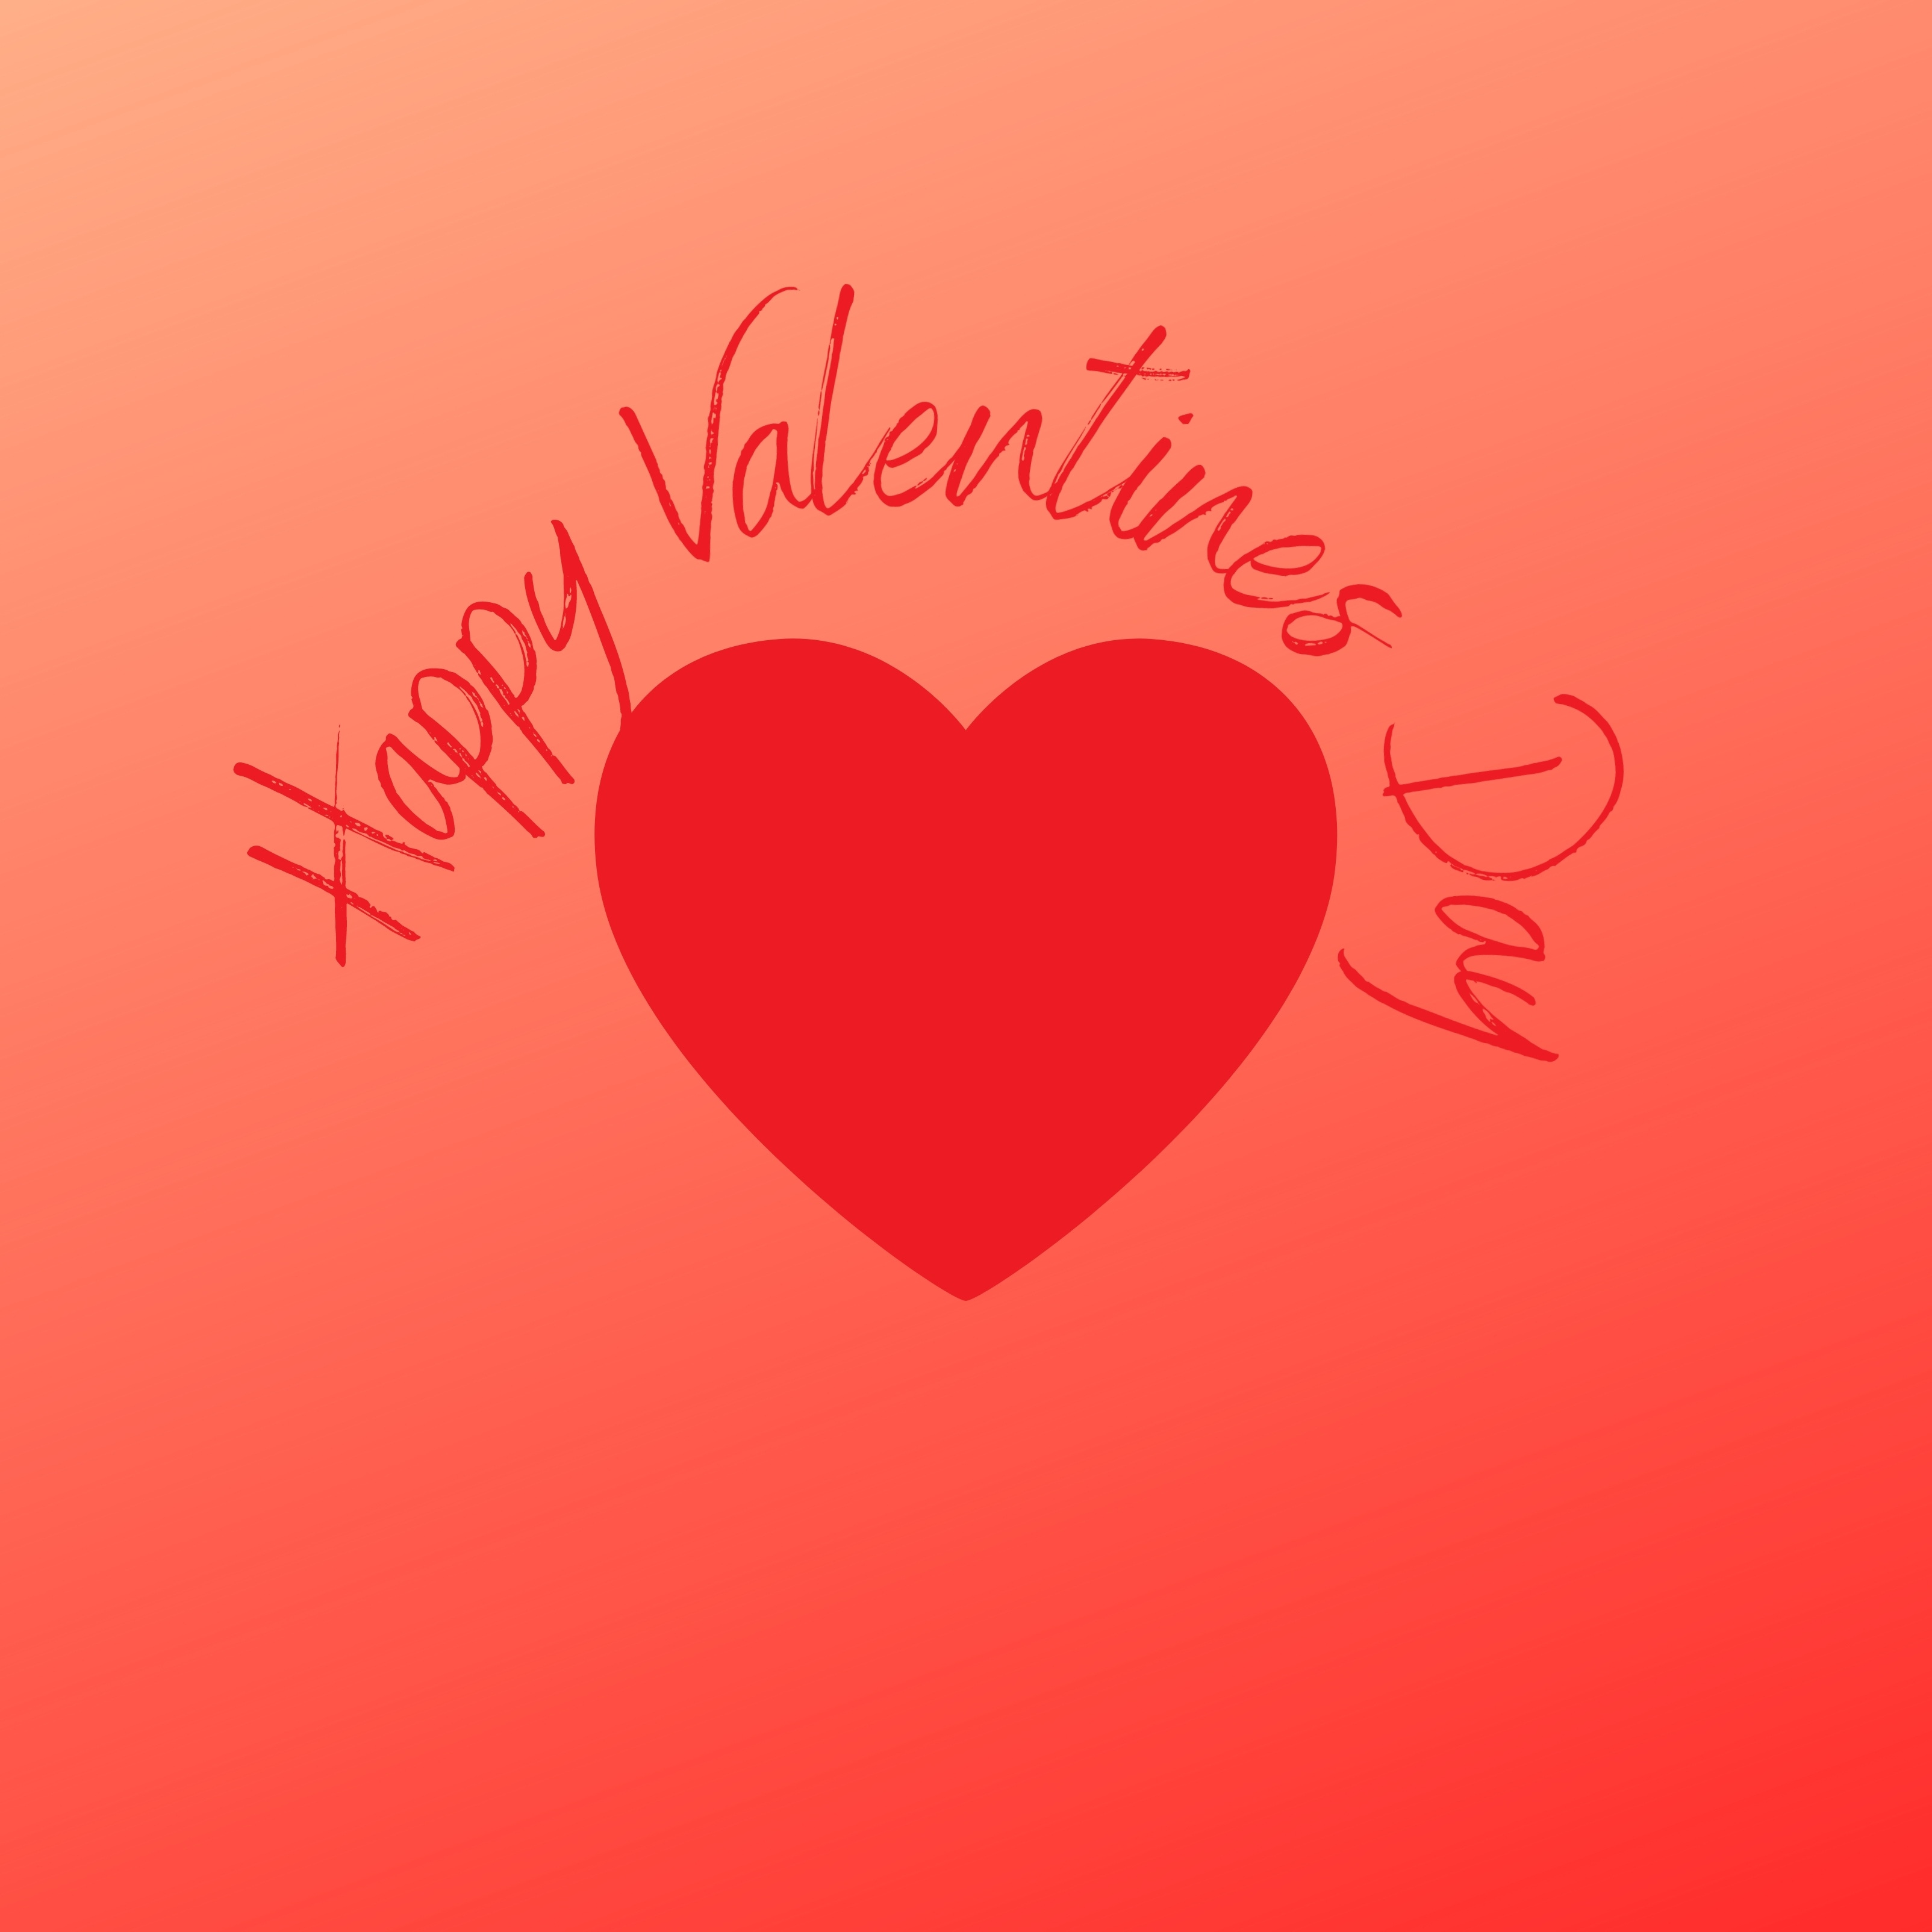 iPad Wallpapers 2021 Happy Valentines Day Love Heart iPad Wallpaper 3208x3208 px